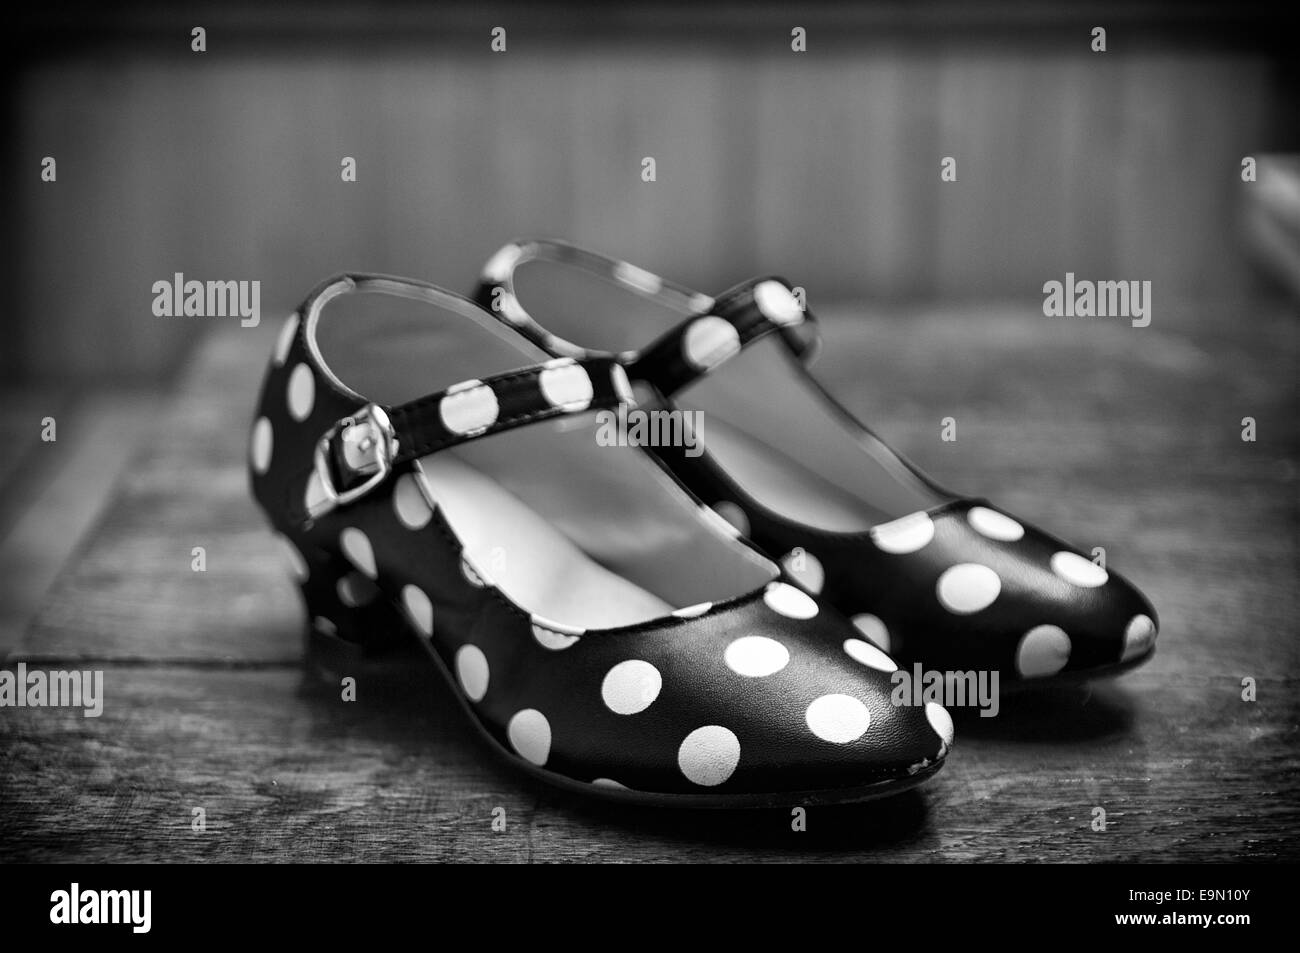 Dancing shoes Stock Photo